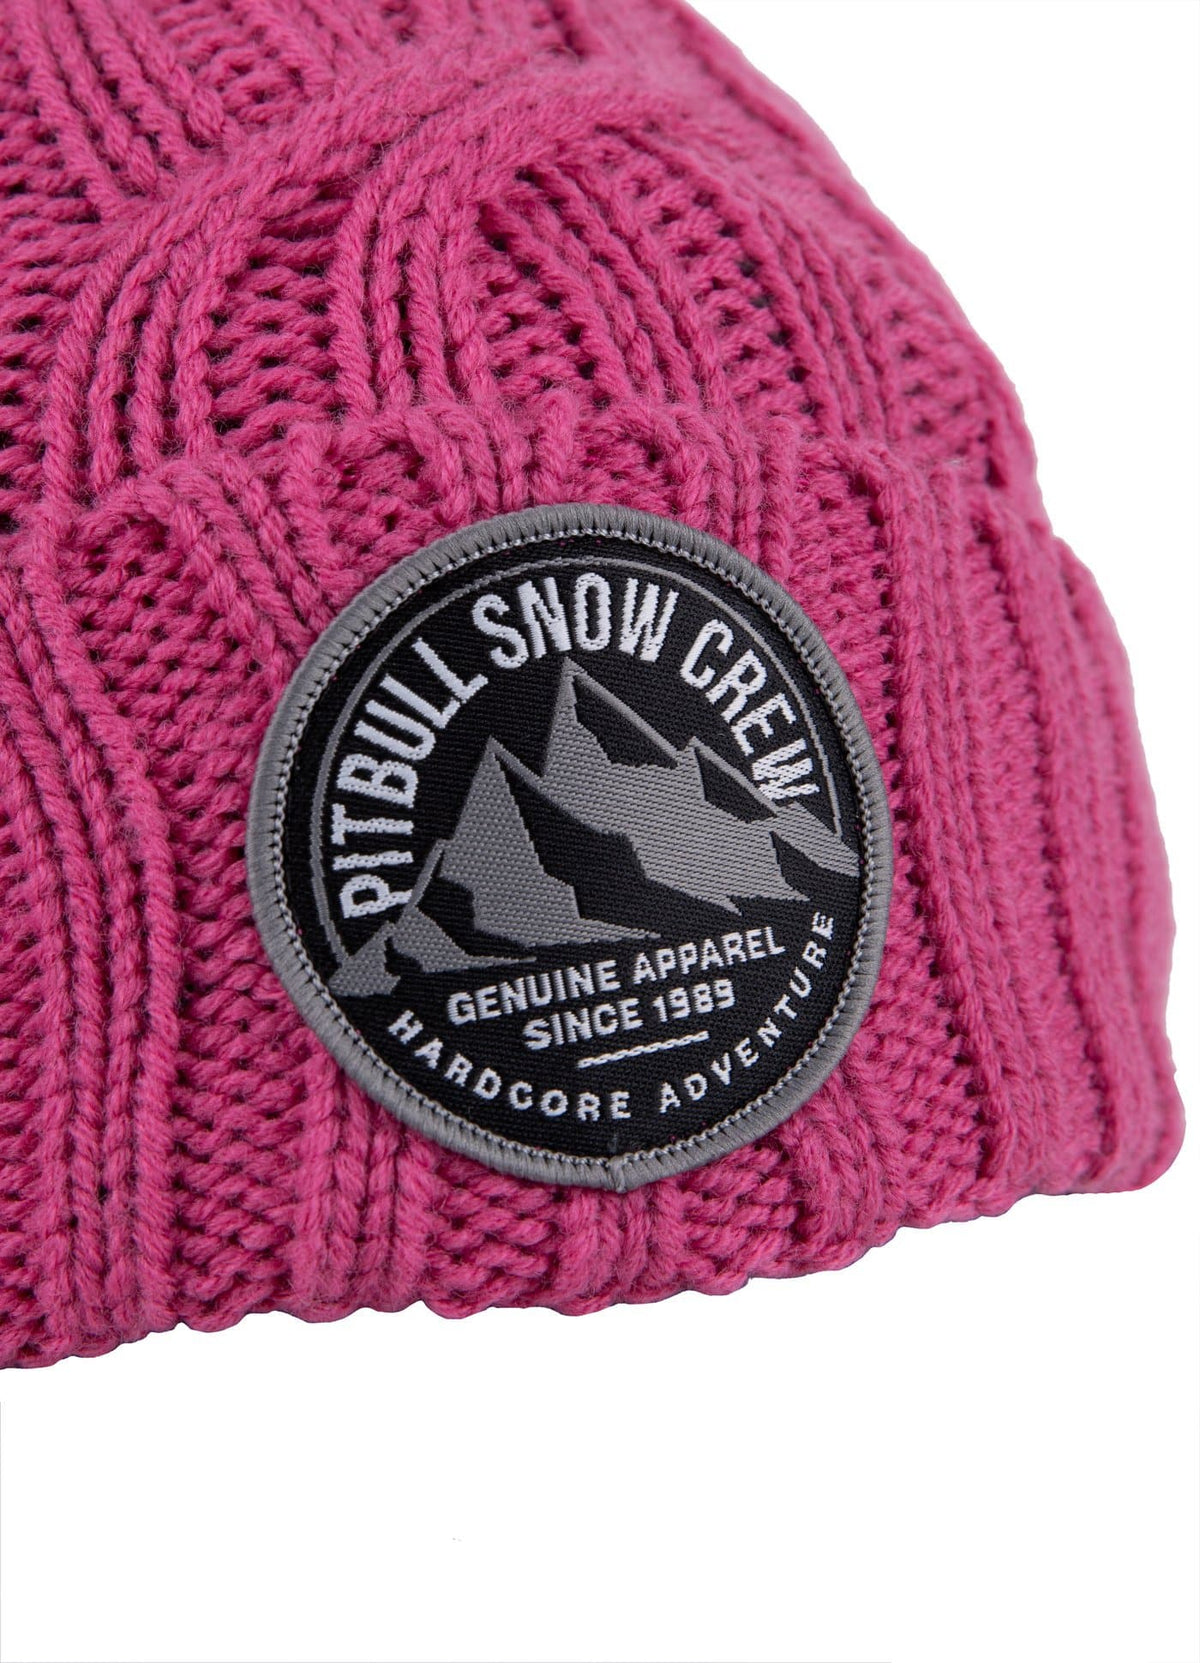 "SNOW CREW" Winter Beanie Pink - pitbullwestcoast